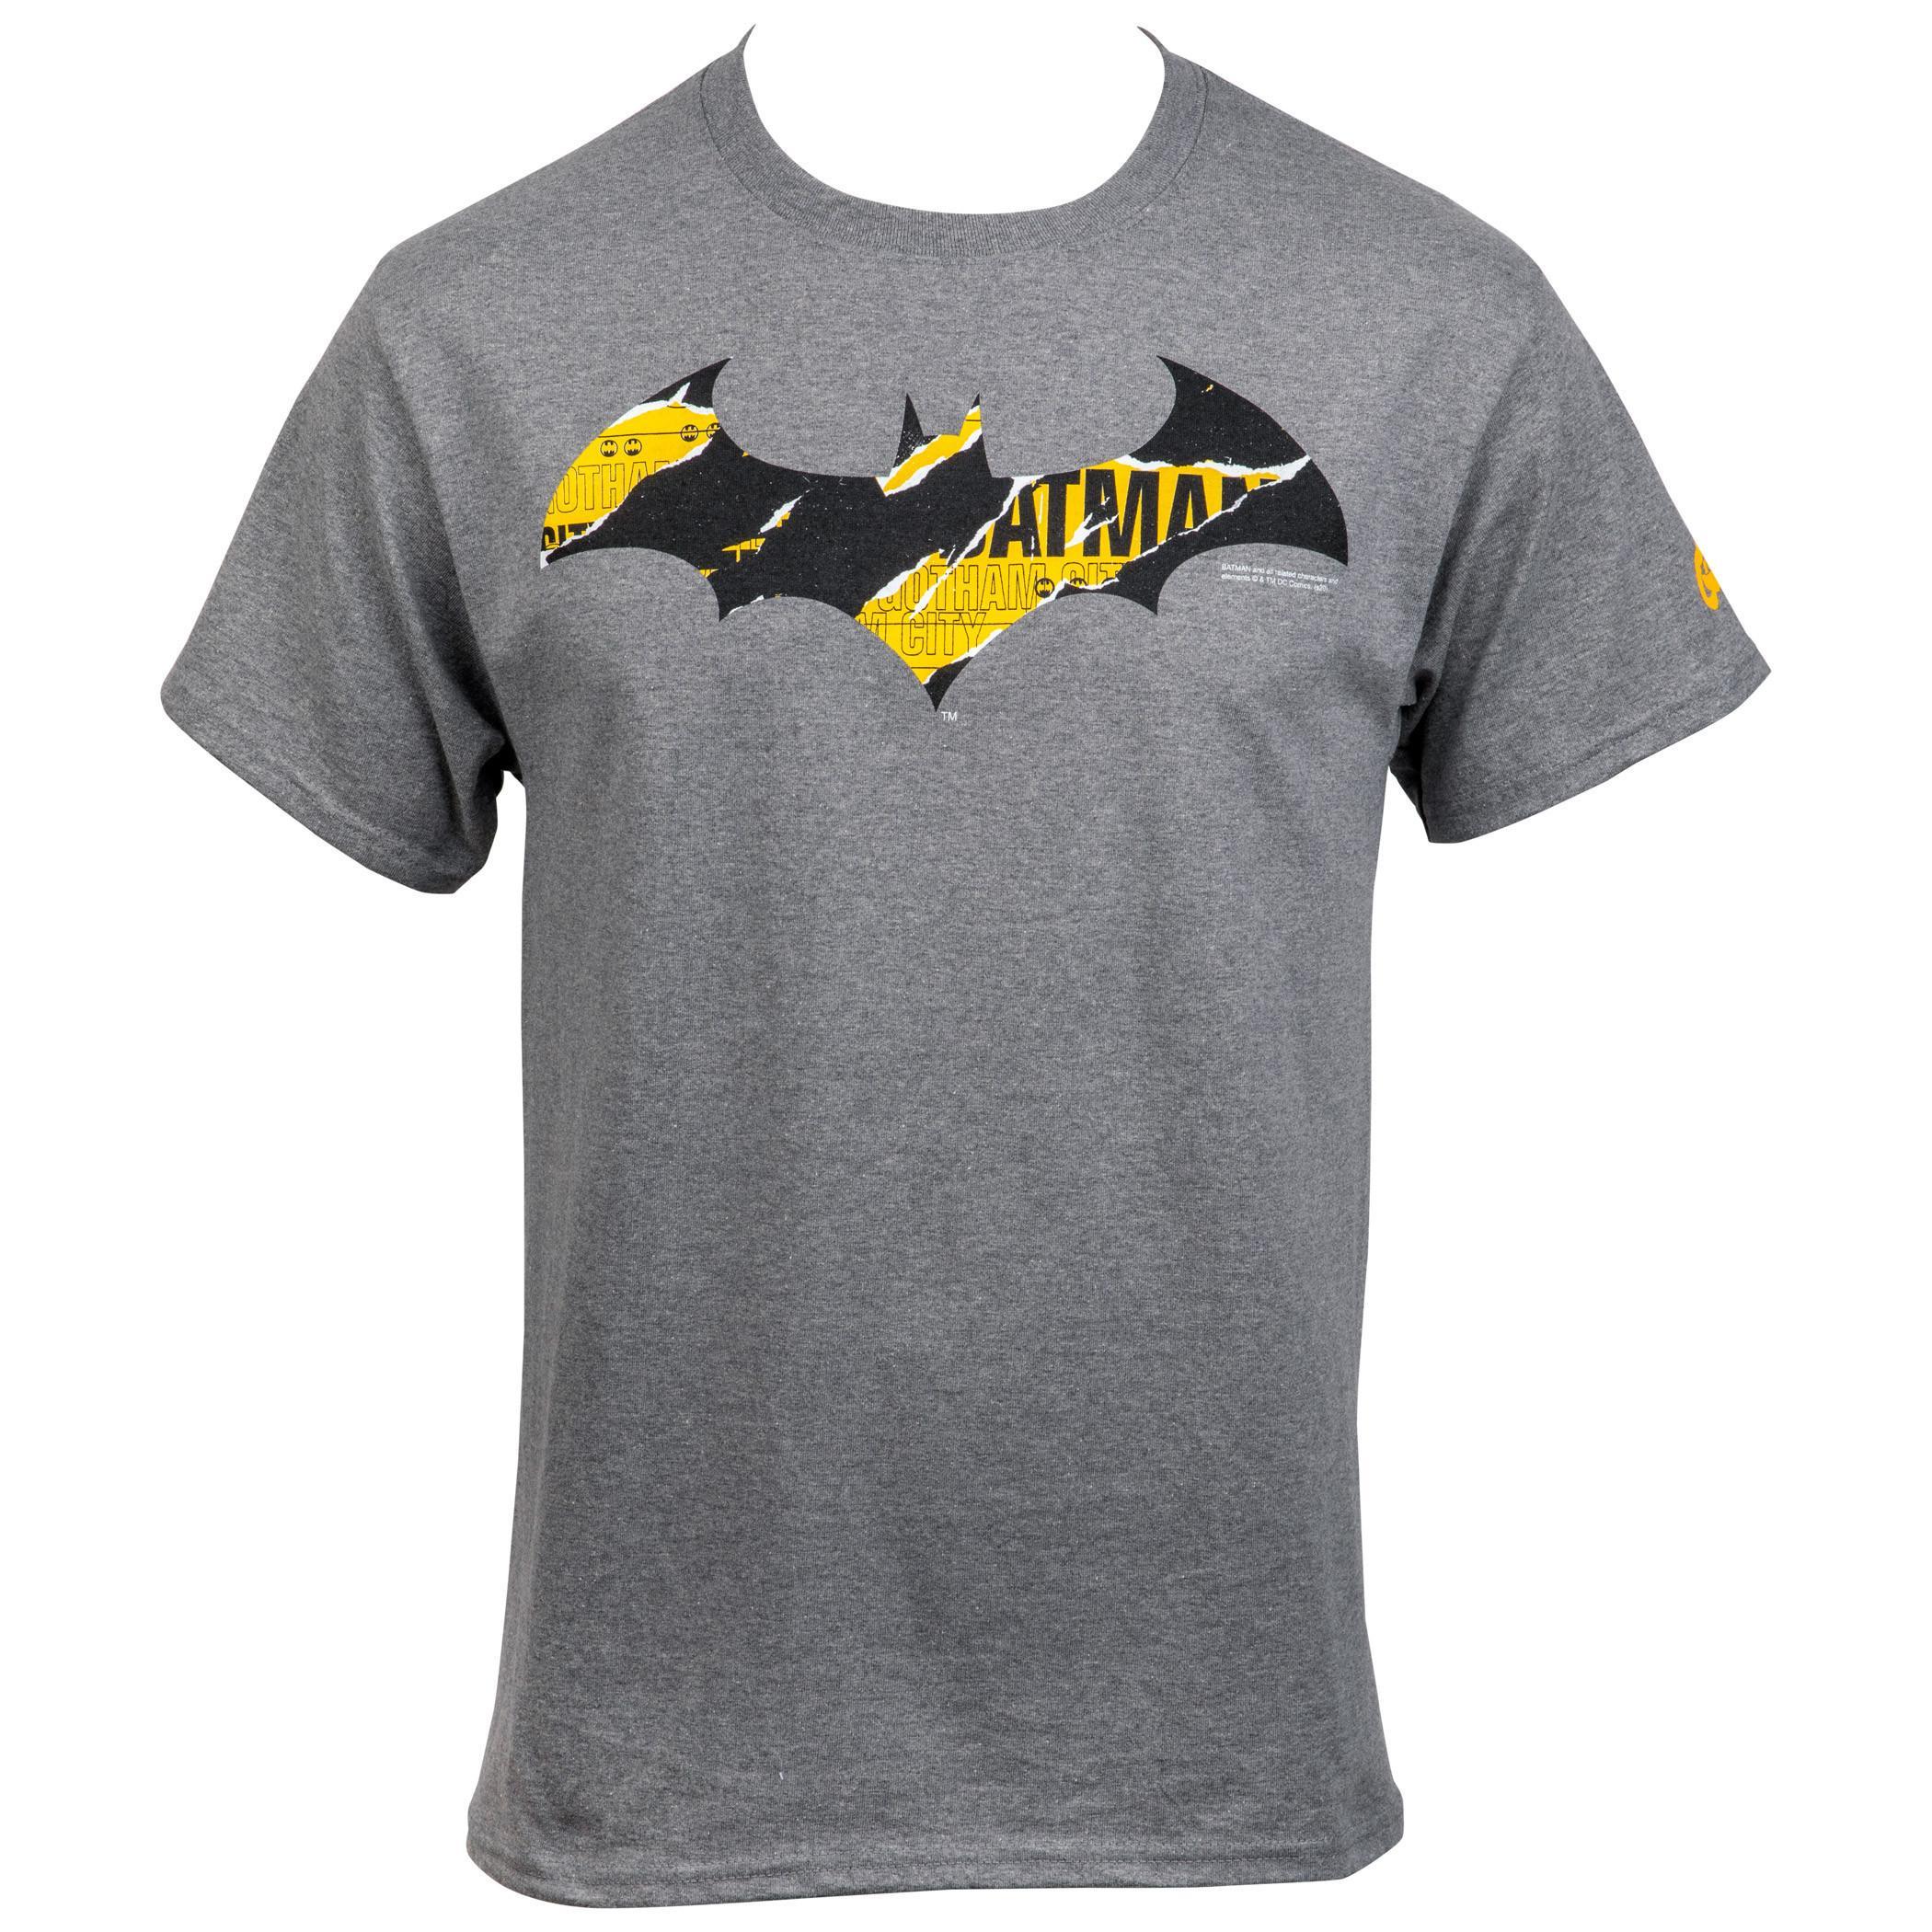 Batman At Work Distressed Symbol T-Shirt Small